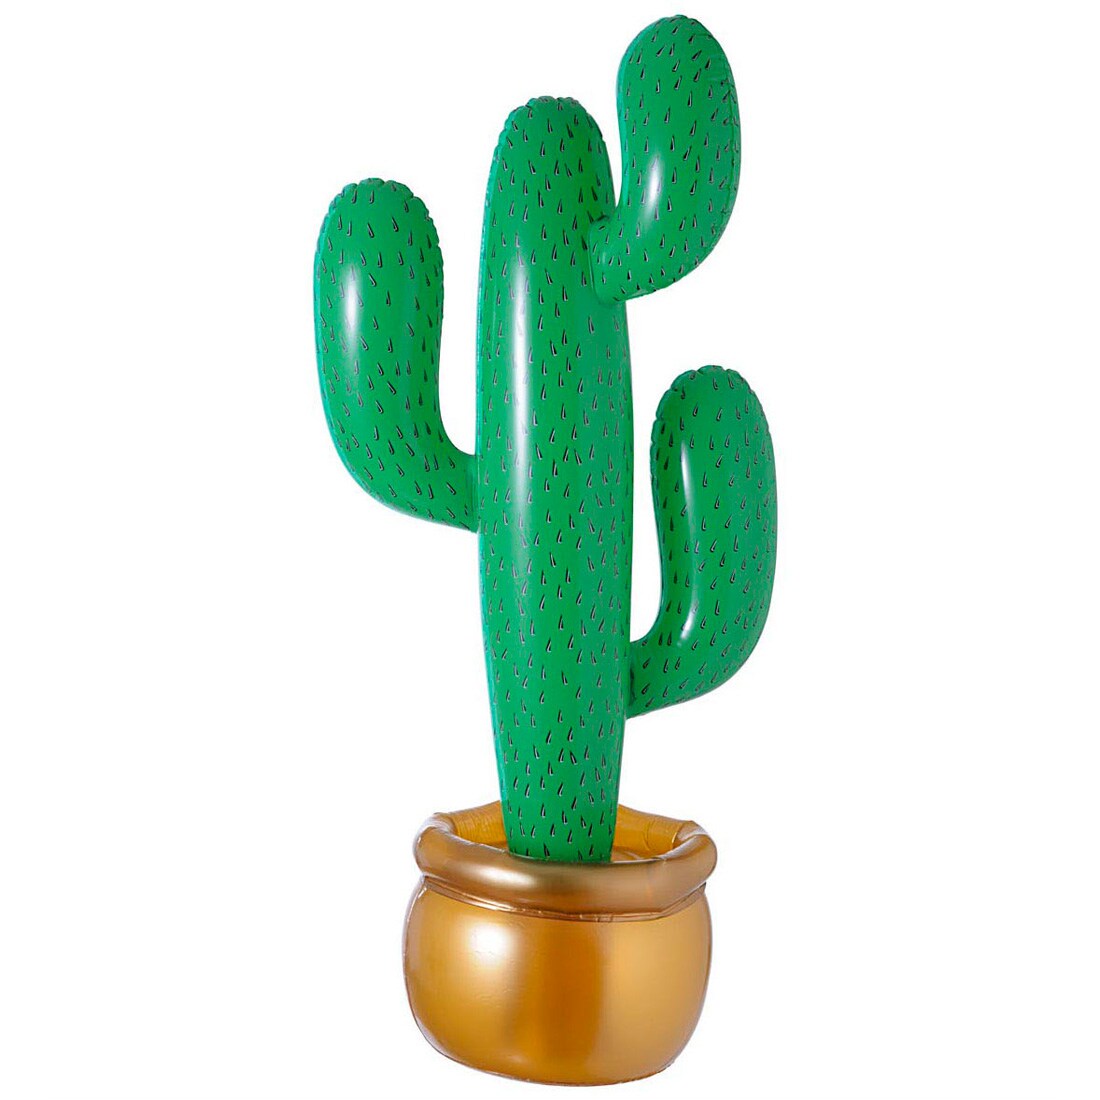 Aufblasbarer Kaktus Deko Artikel, 7,99 €